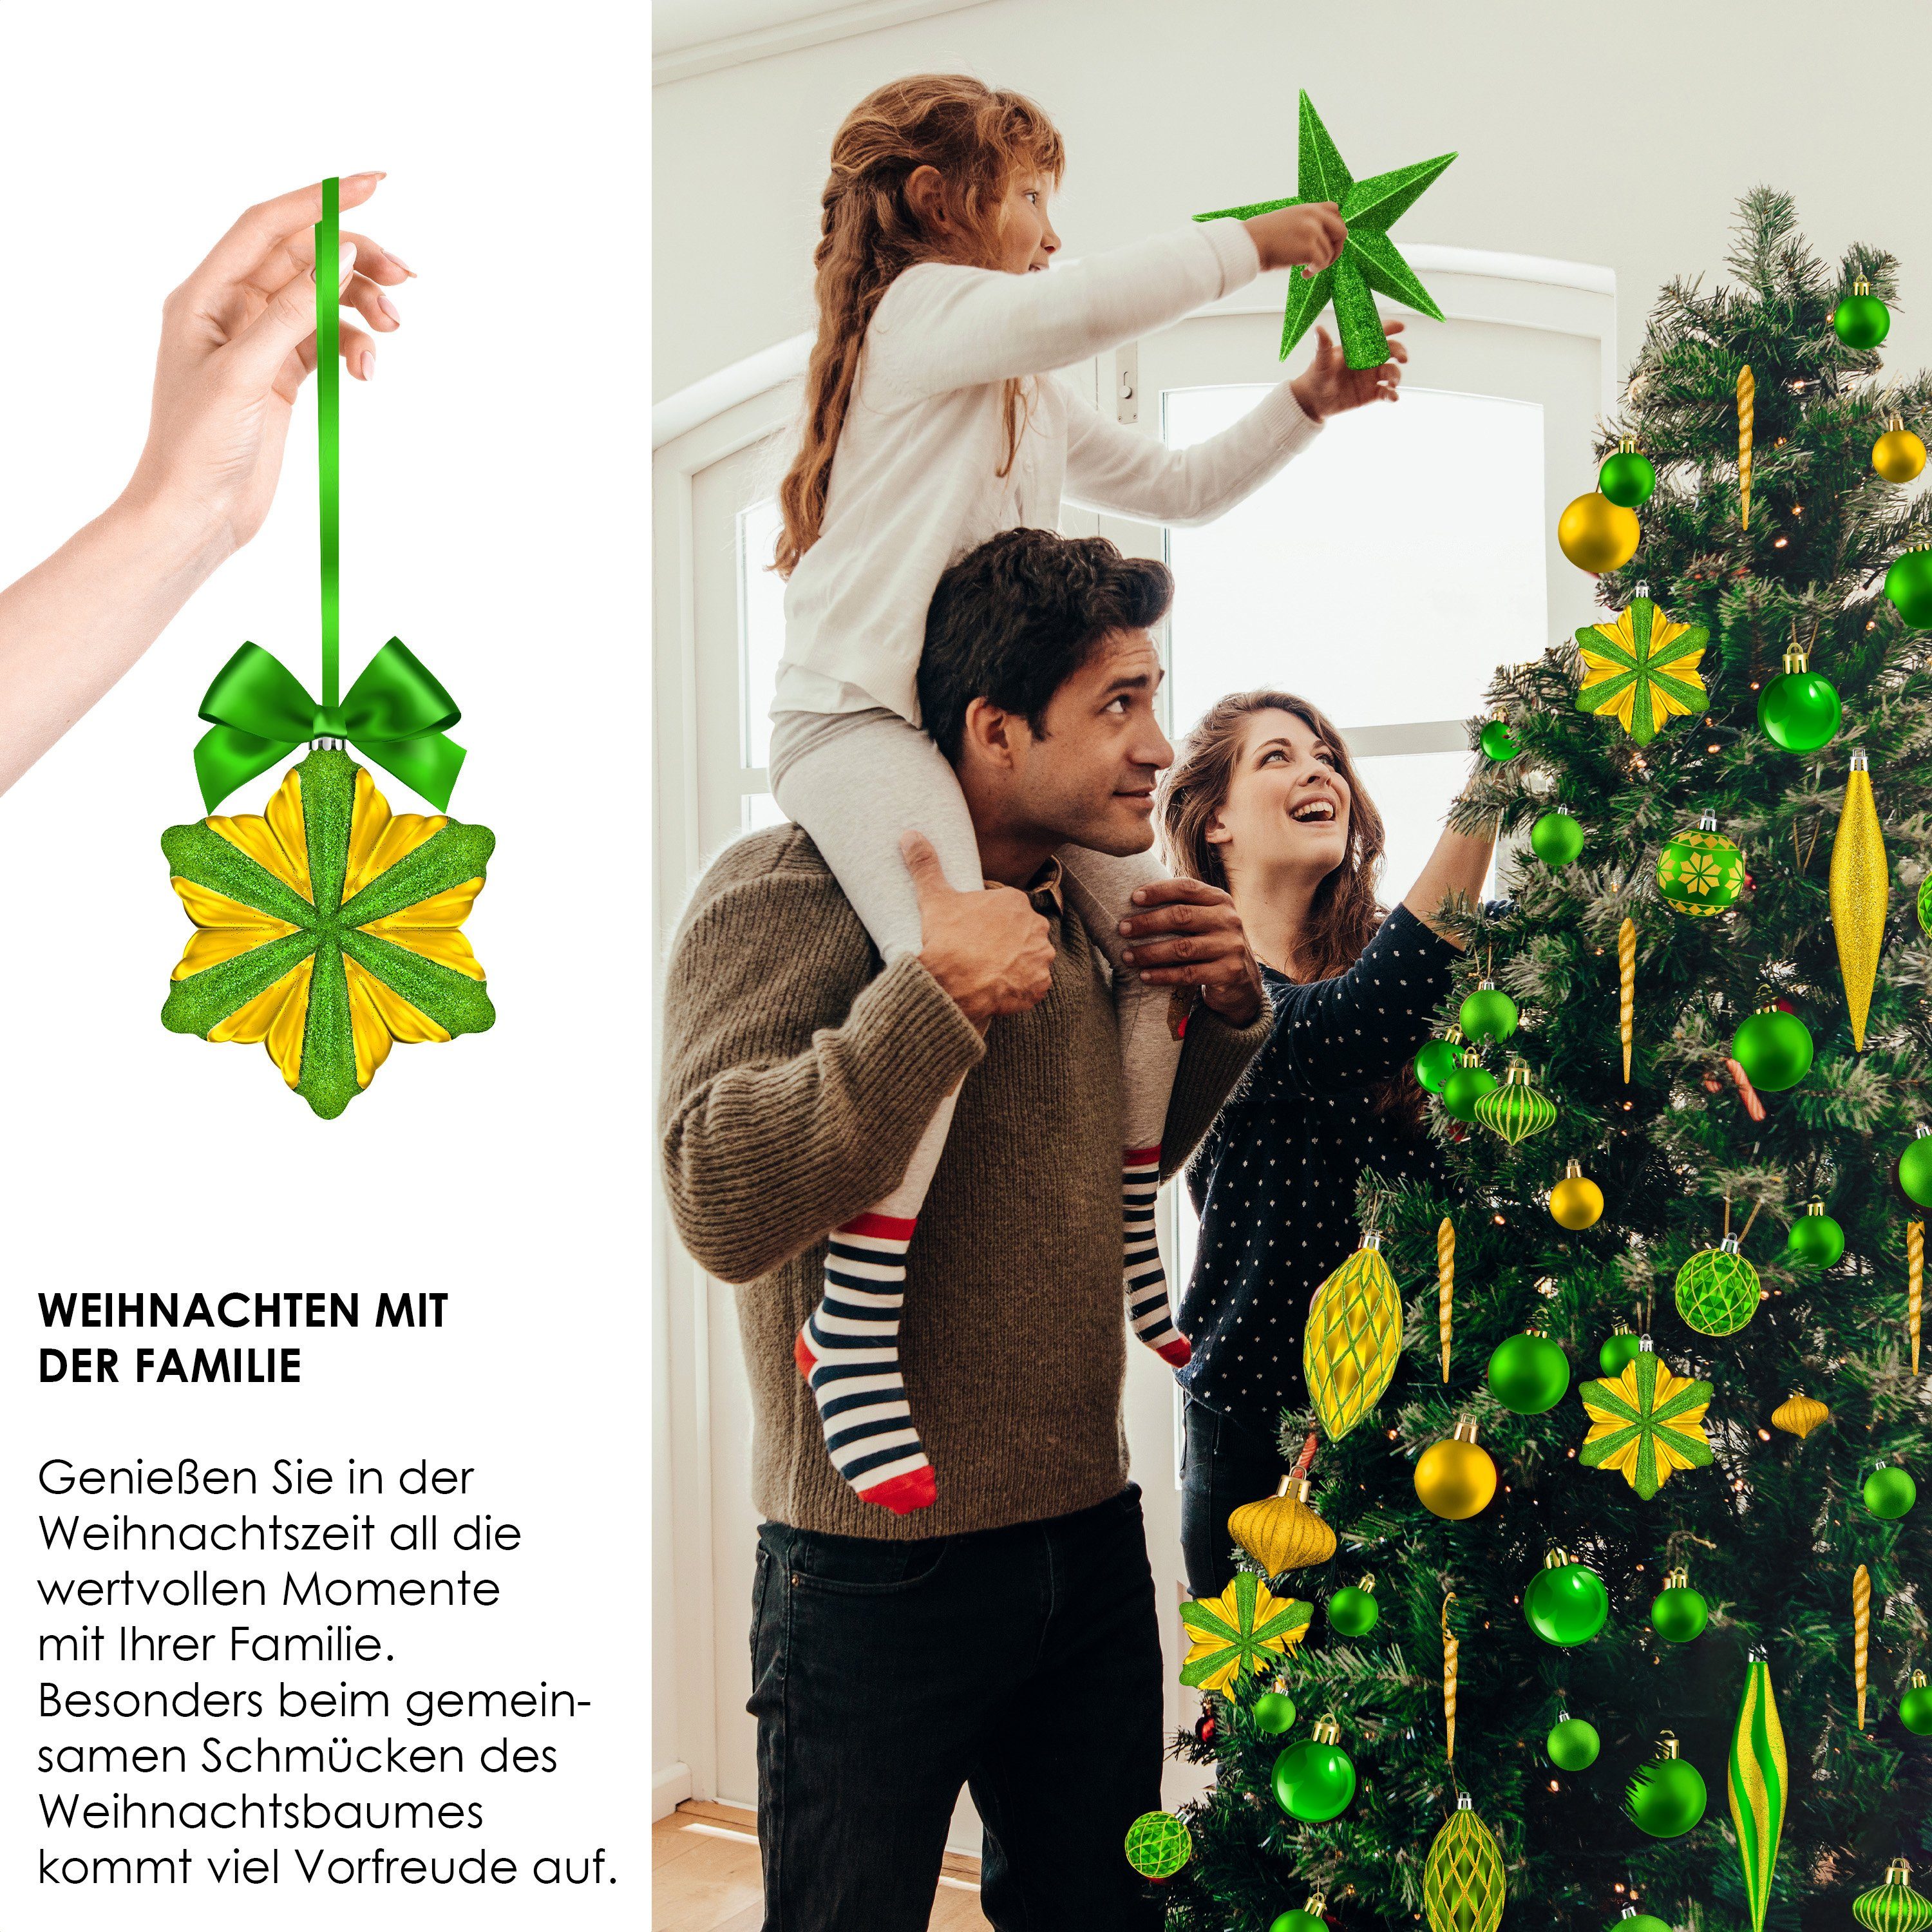 gold grün Christbaumkugeln Weihnachtskugeln 105-teiliges Christbaumschmuck / KESSER Baumspitze Set (135-tlg),